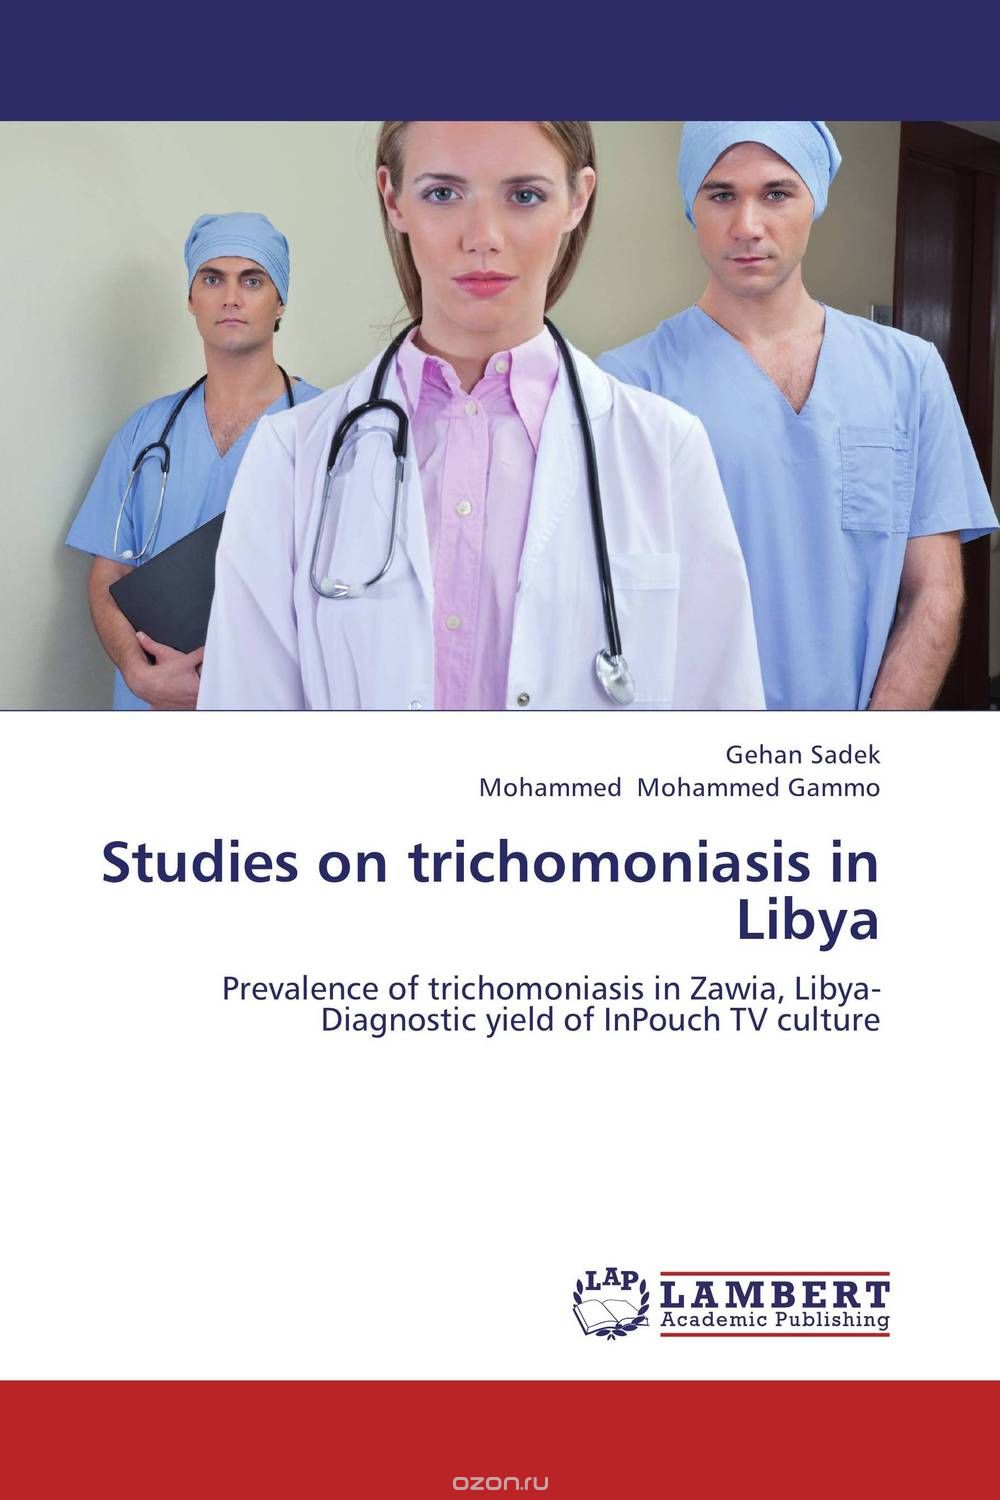 Скачать книгу "Studies on trichomoniasis in Libya"